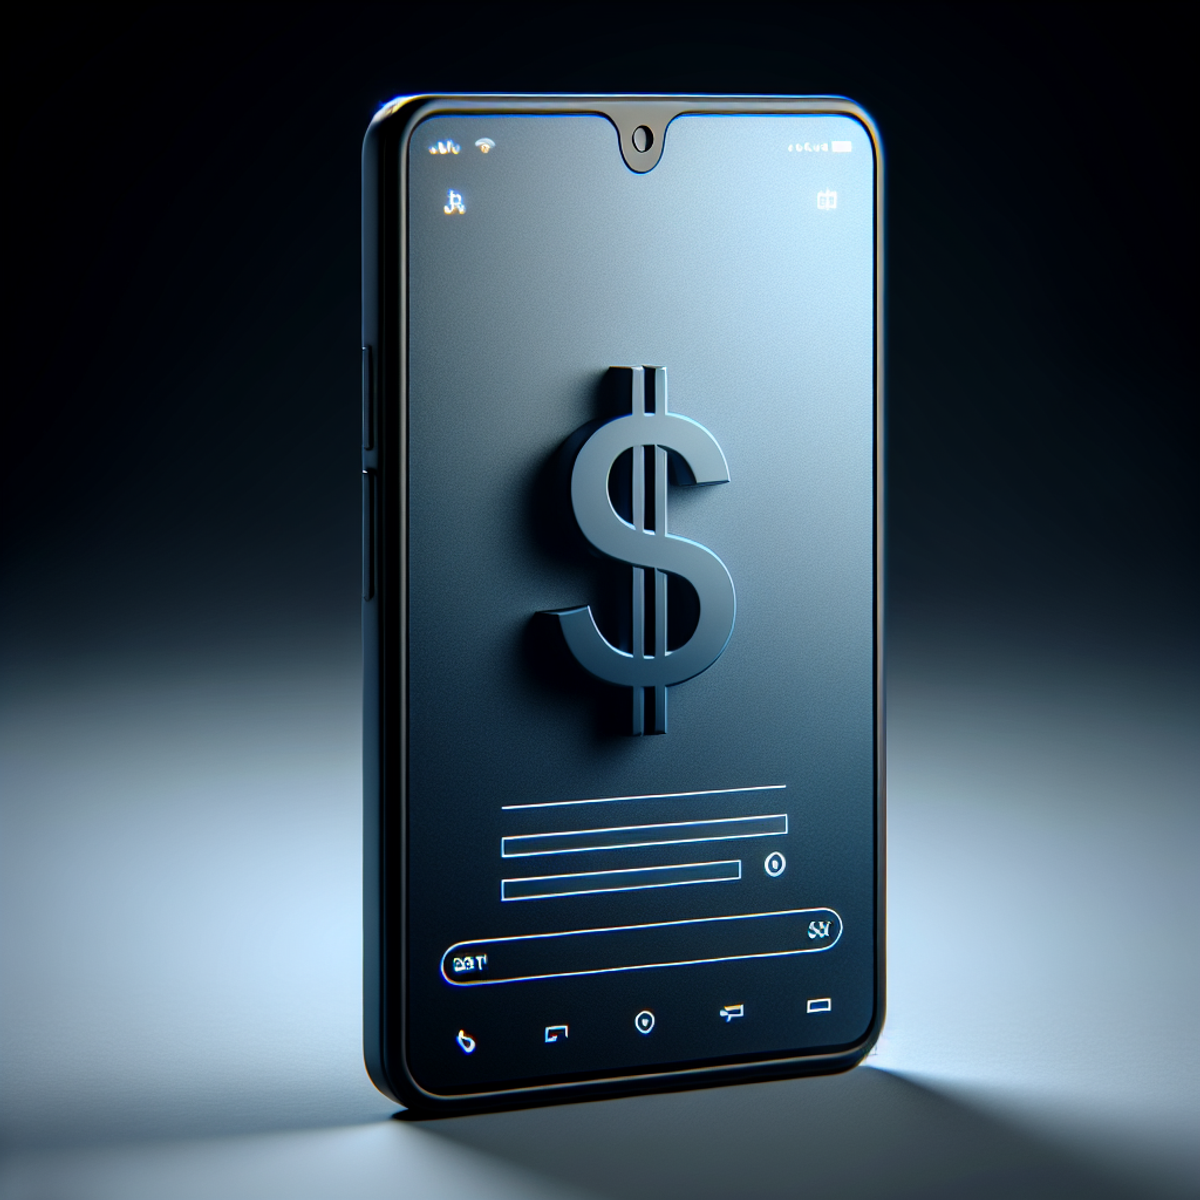 Smartphone displaying money symbol.